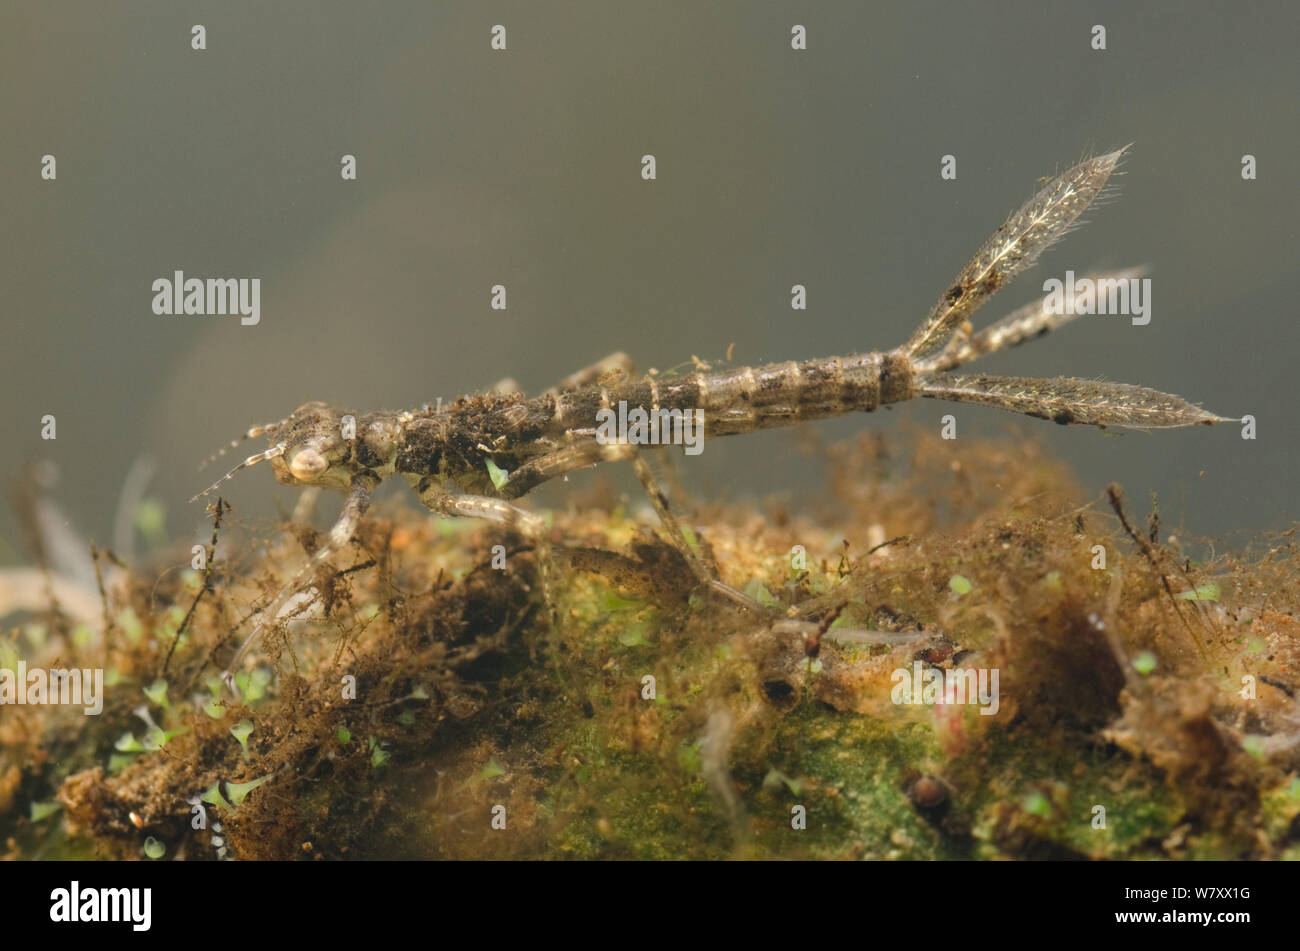 A stretta damselfly alato (Coenagrionidae) ninfa tra i sedimenti, Europa, Gennaio, condizioni controllate. Foto Stock